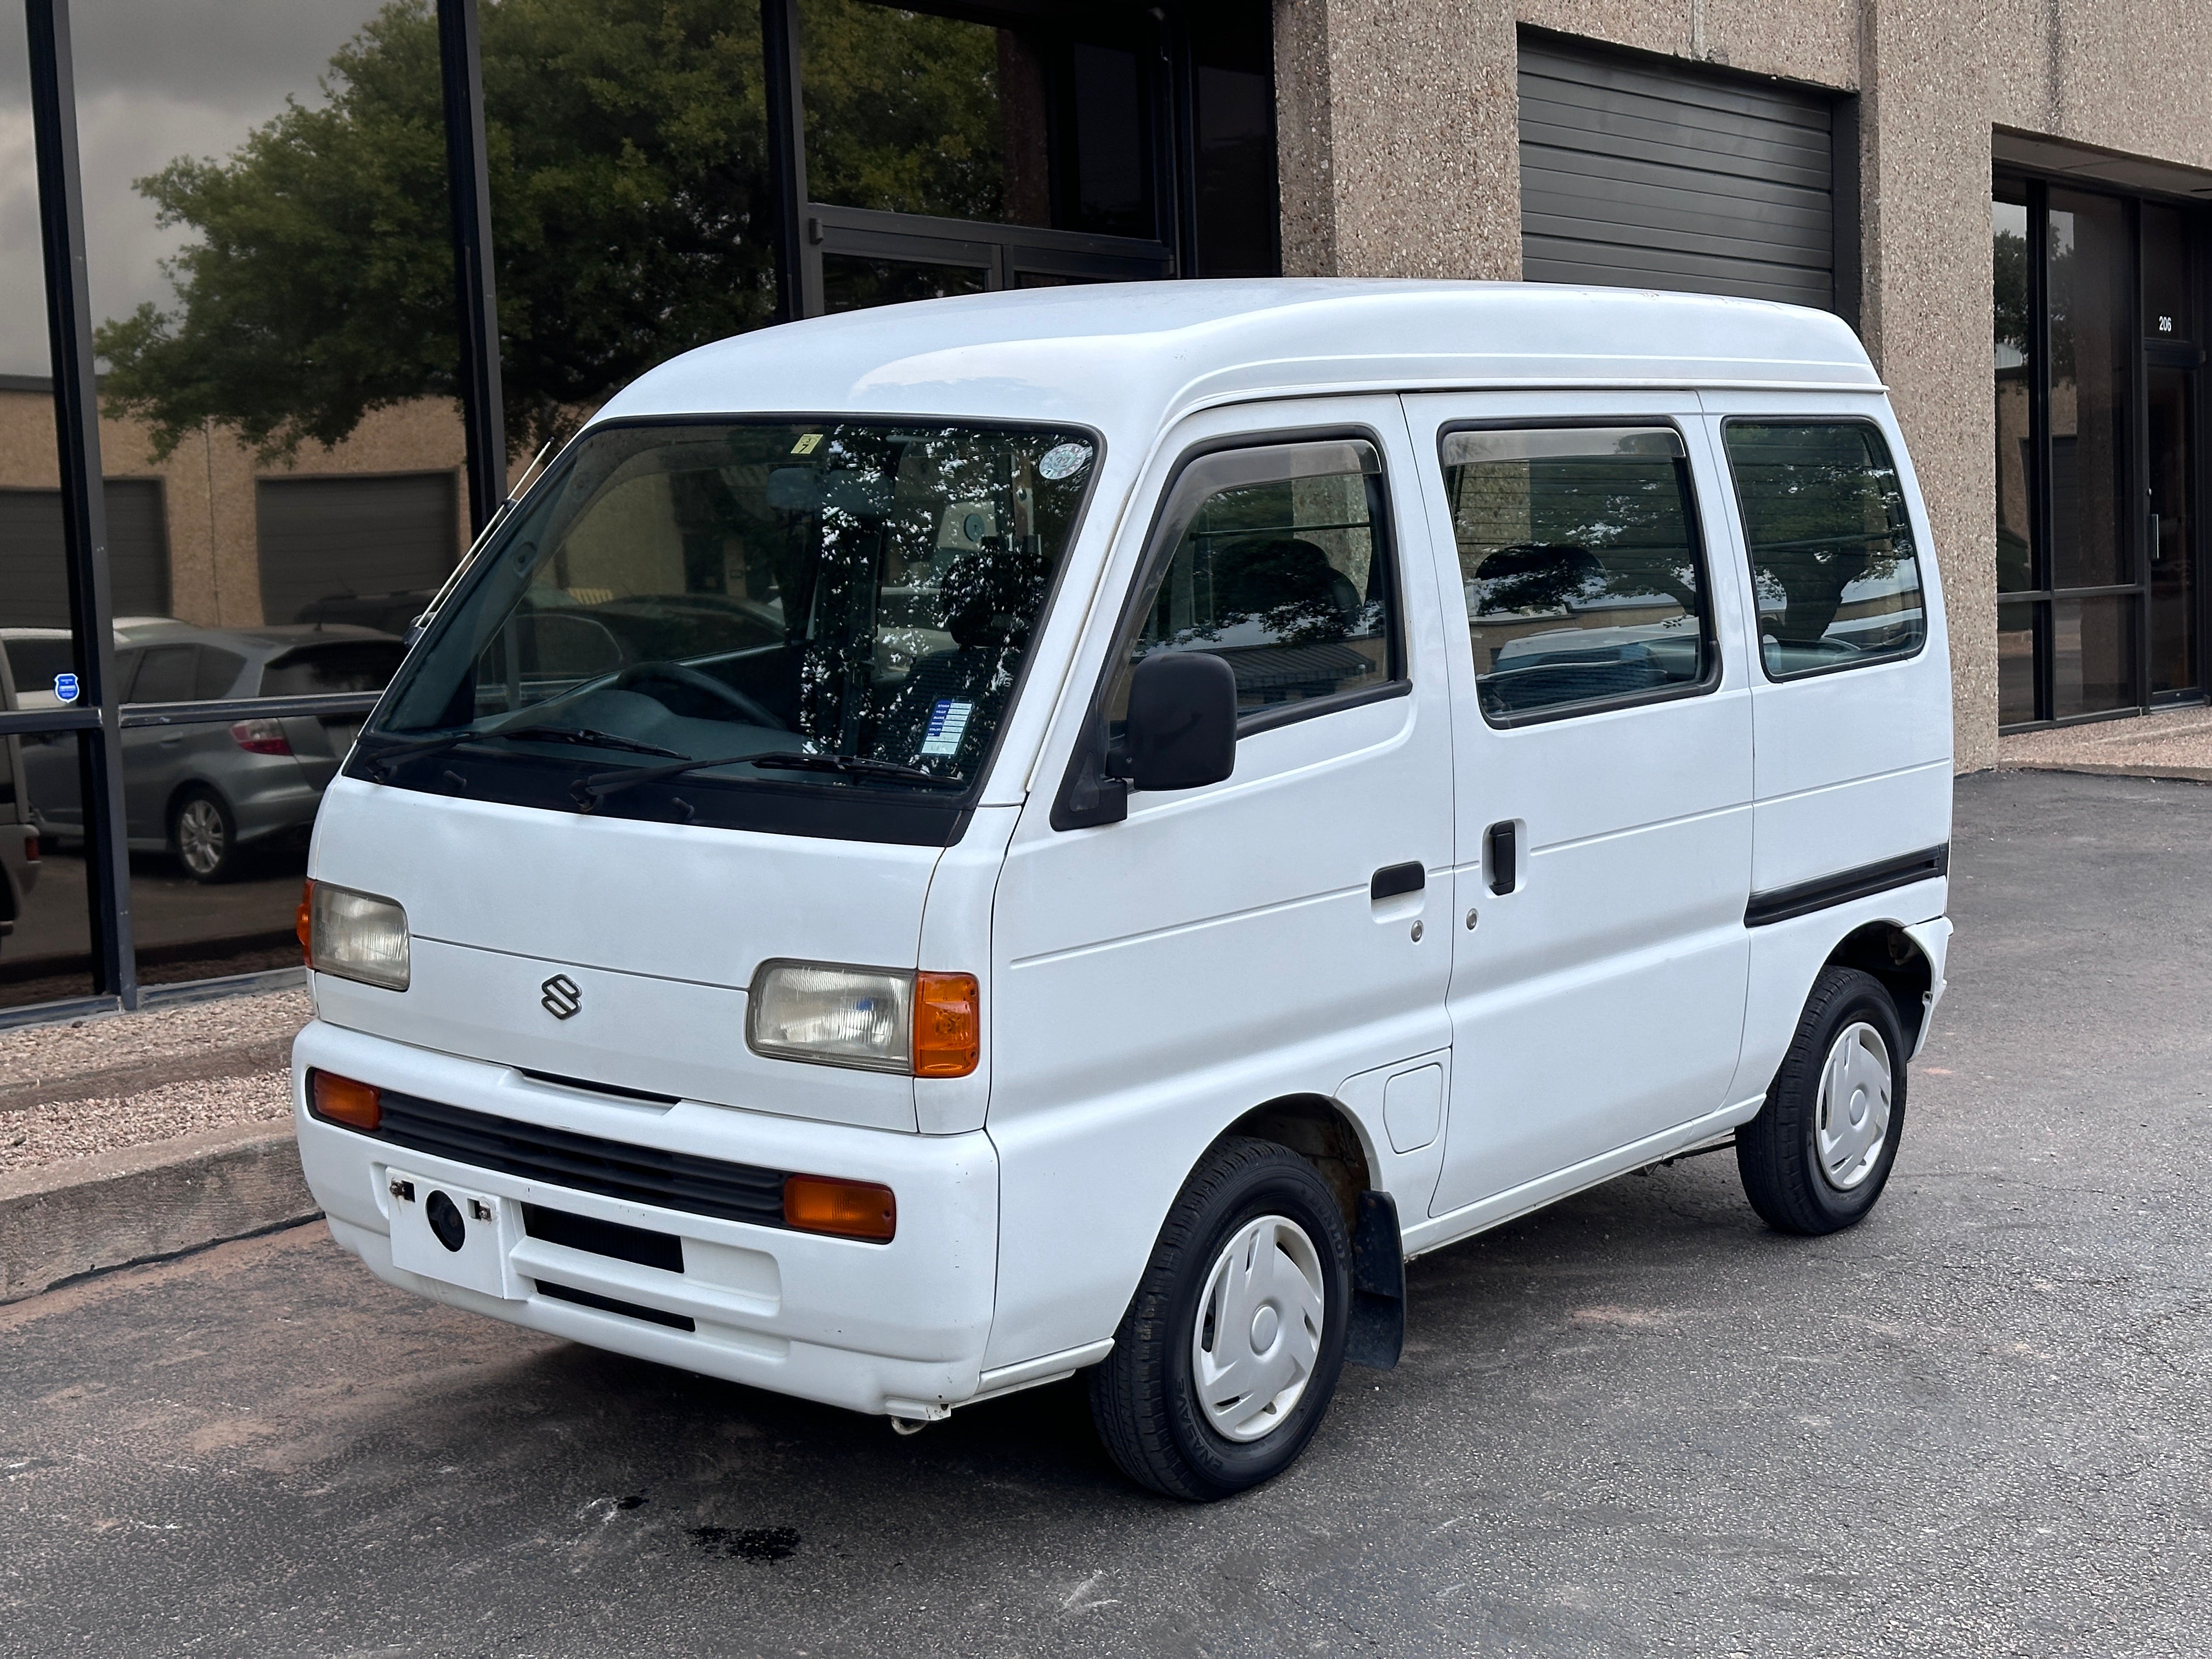 1996 Suzuki Every Kei Van